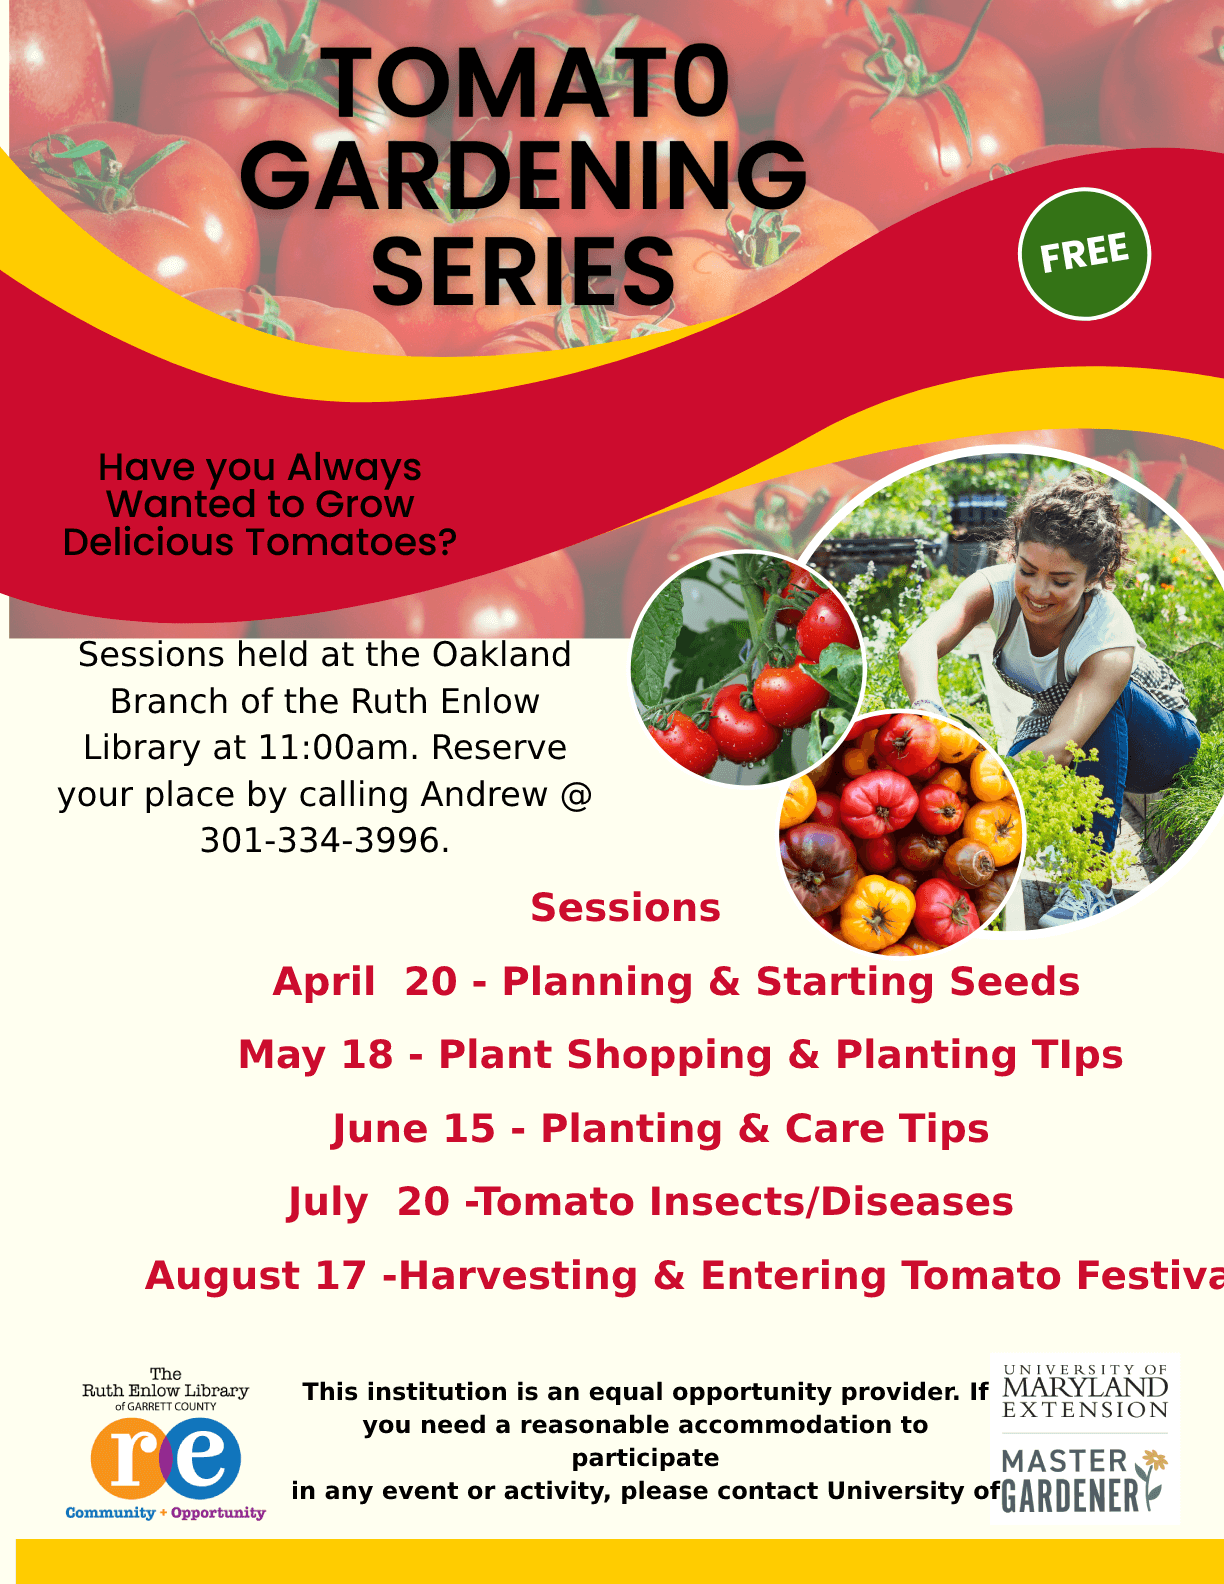 Tomato Gardening Series- Planting & Care Tips at Deep Creek Lake, MD